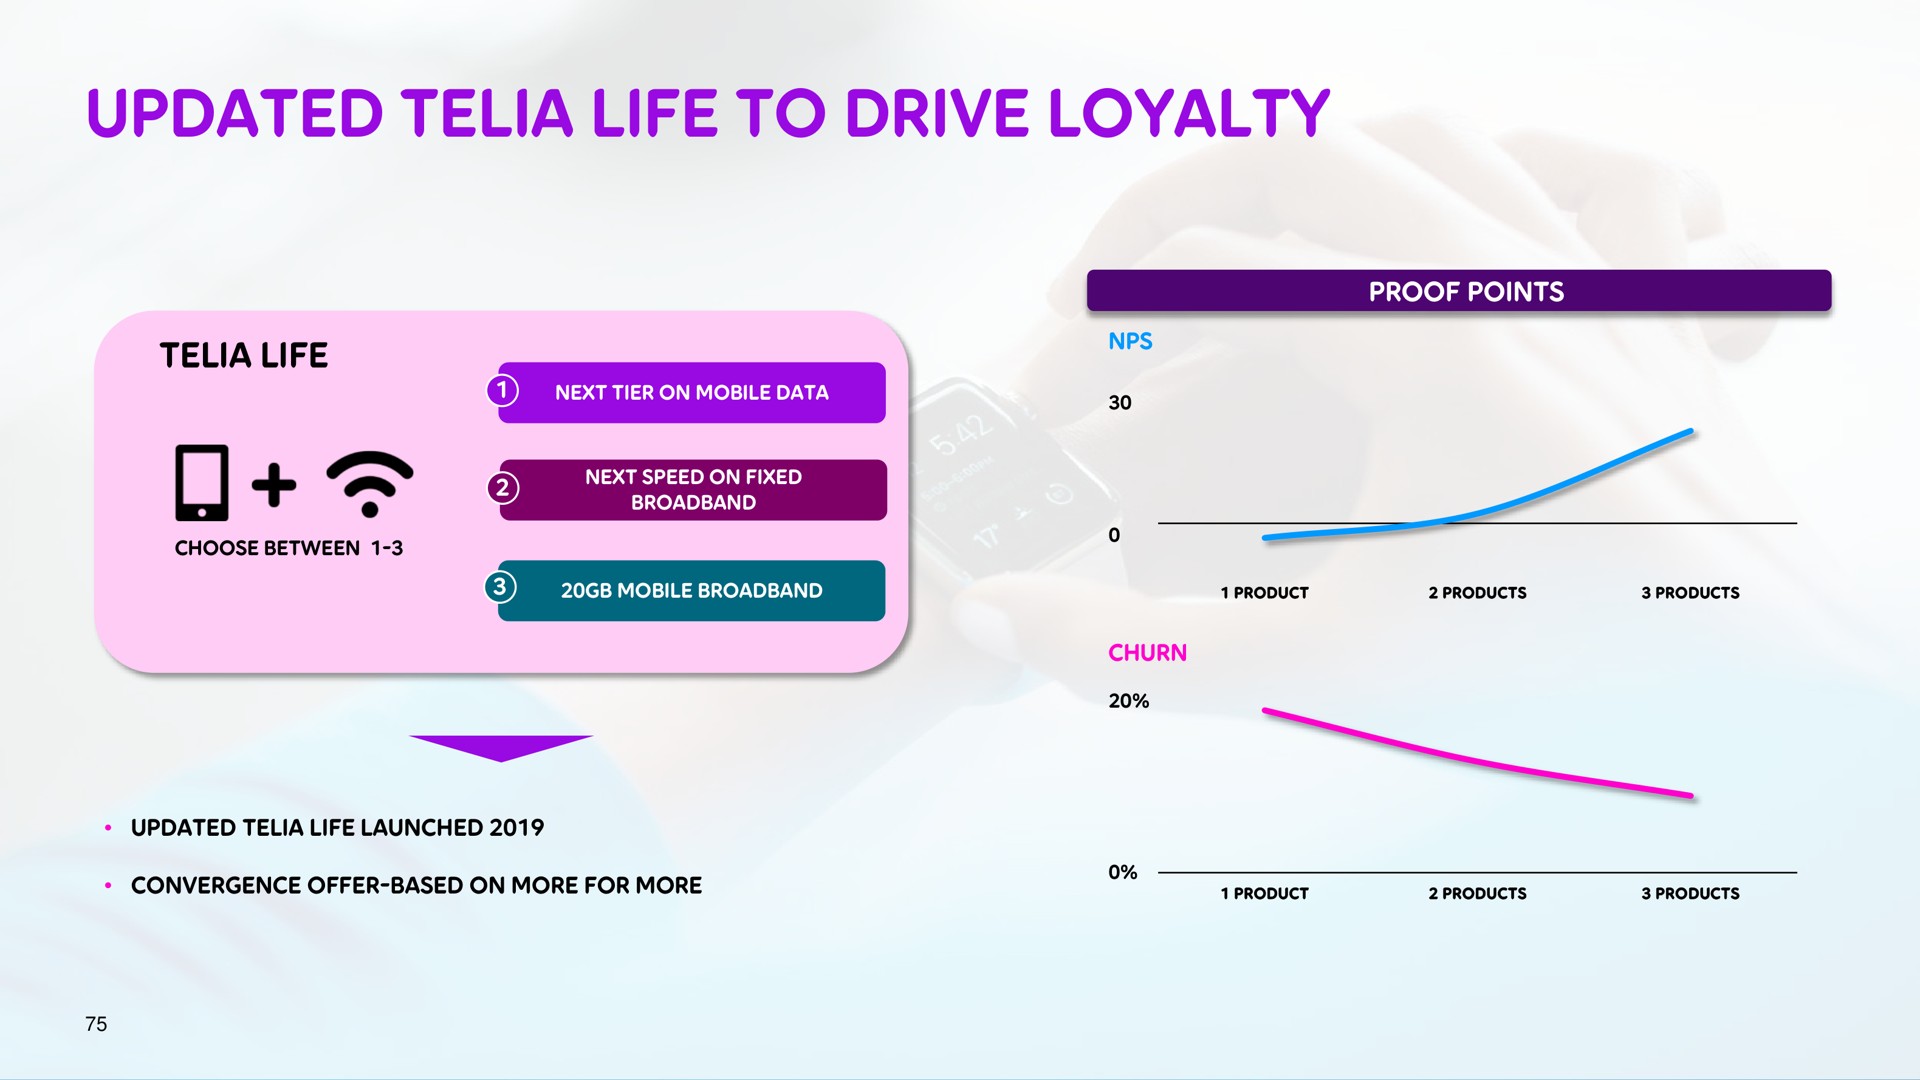 updated life to drive loyalty | Telia Company